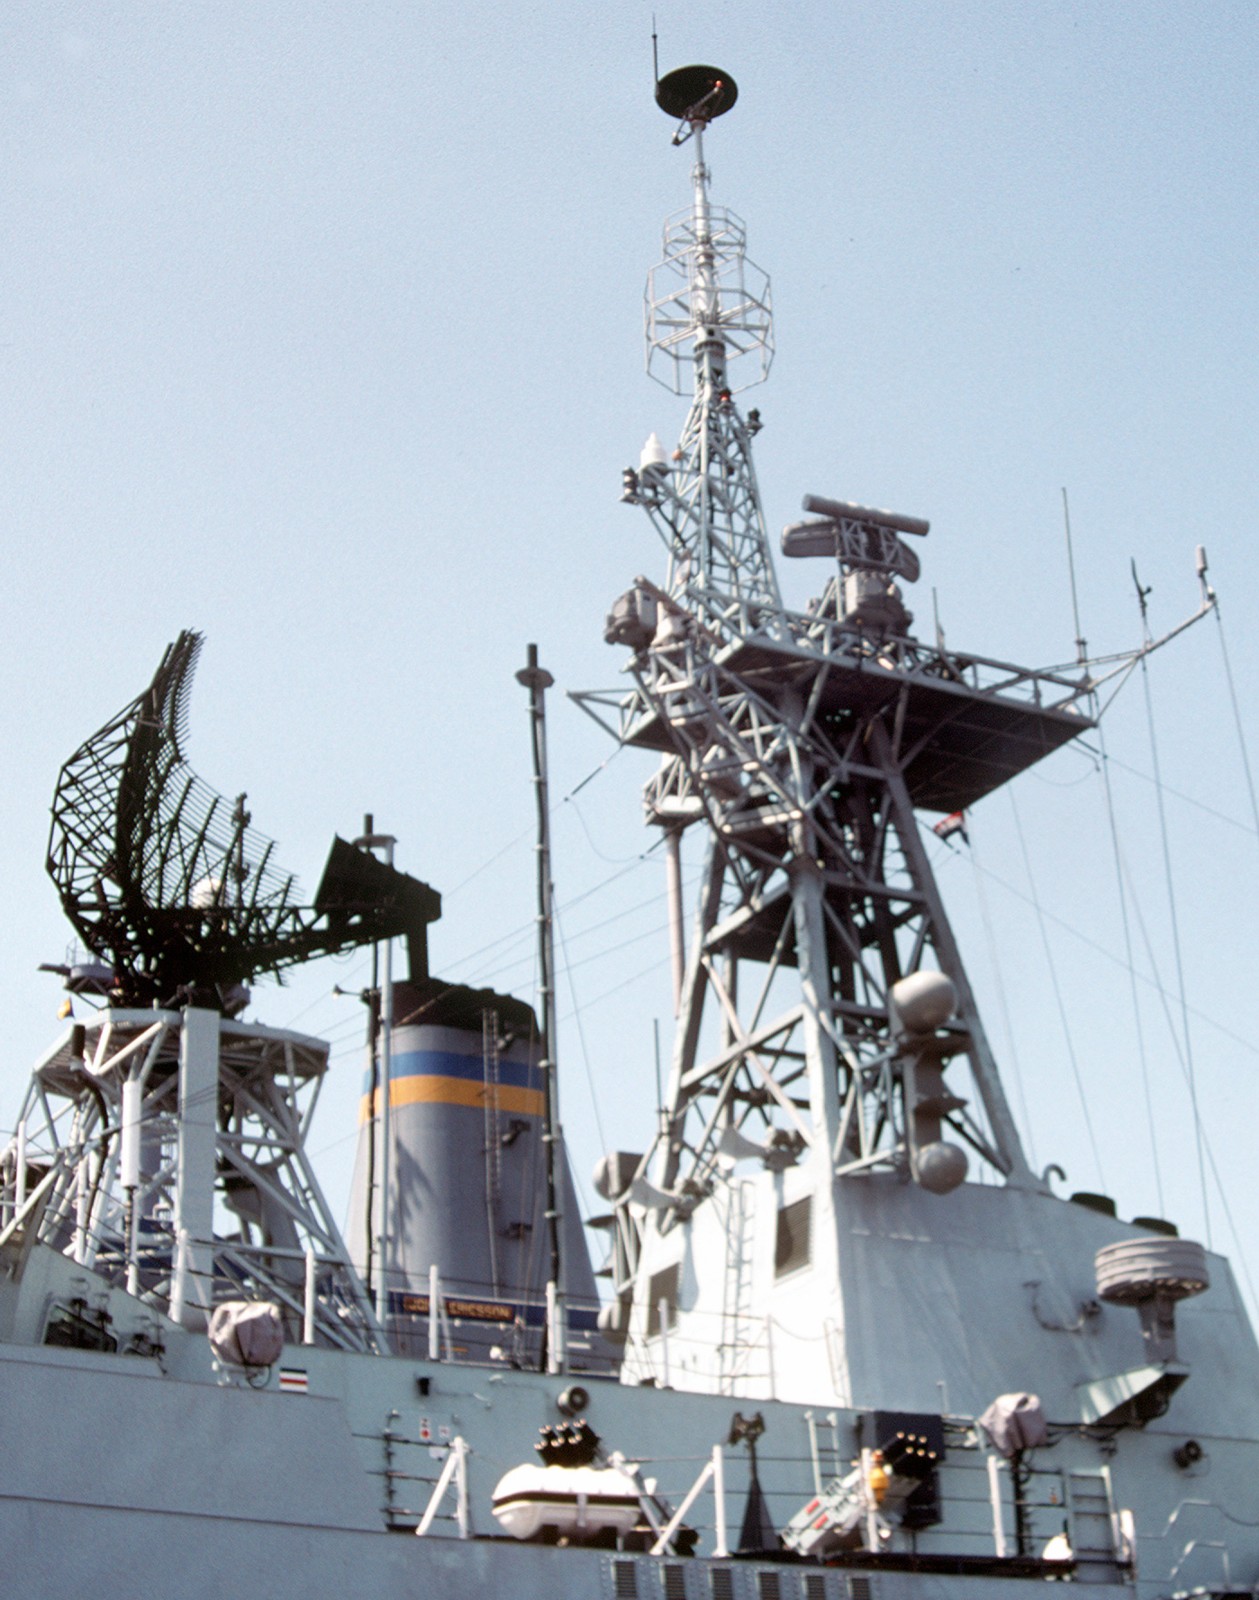 halifax class helicopter patrol frigate royal canadian navy 34c an/sps-49 radar sea giraffe